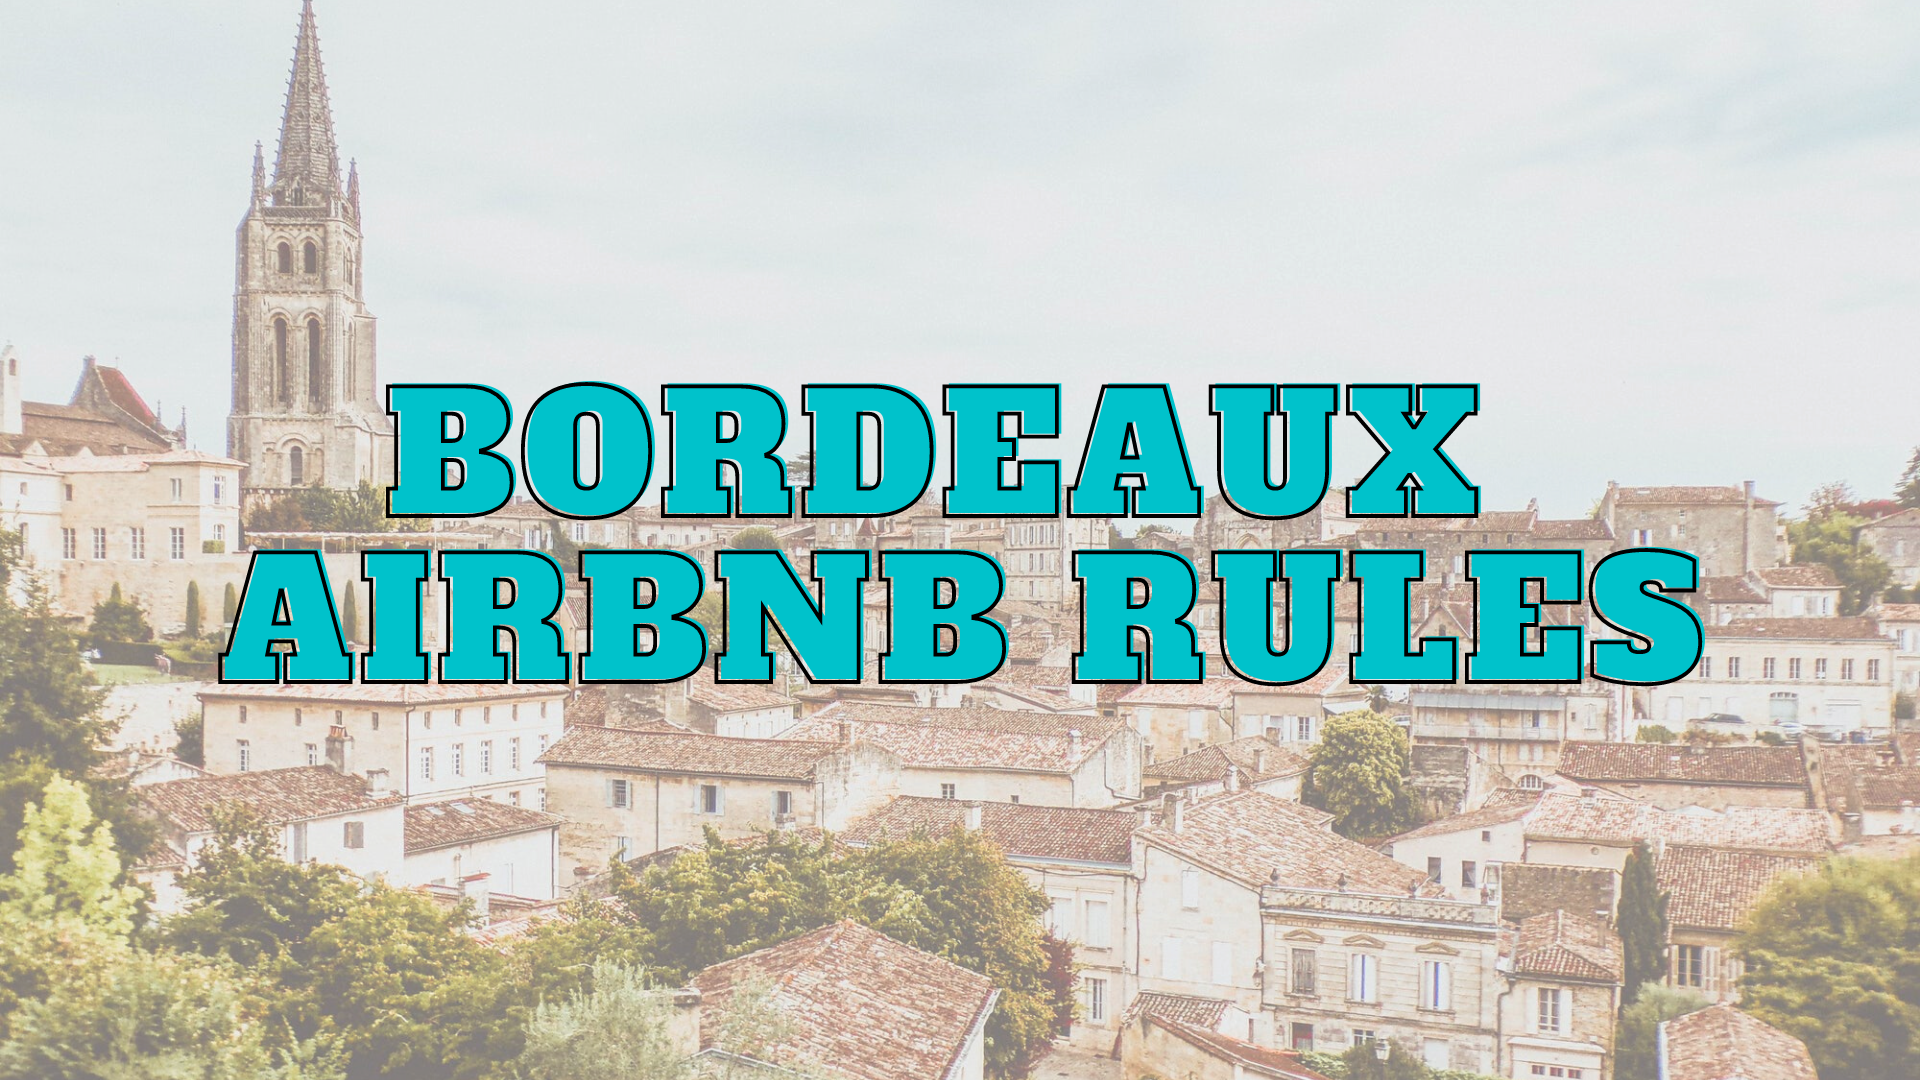 Bordeaux airbnb rules